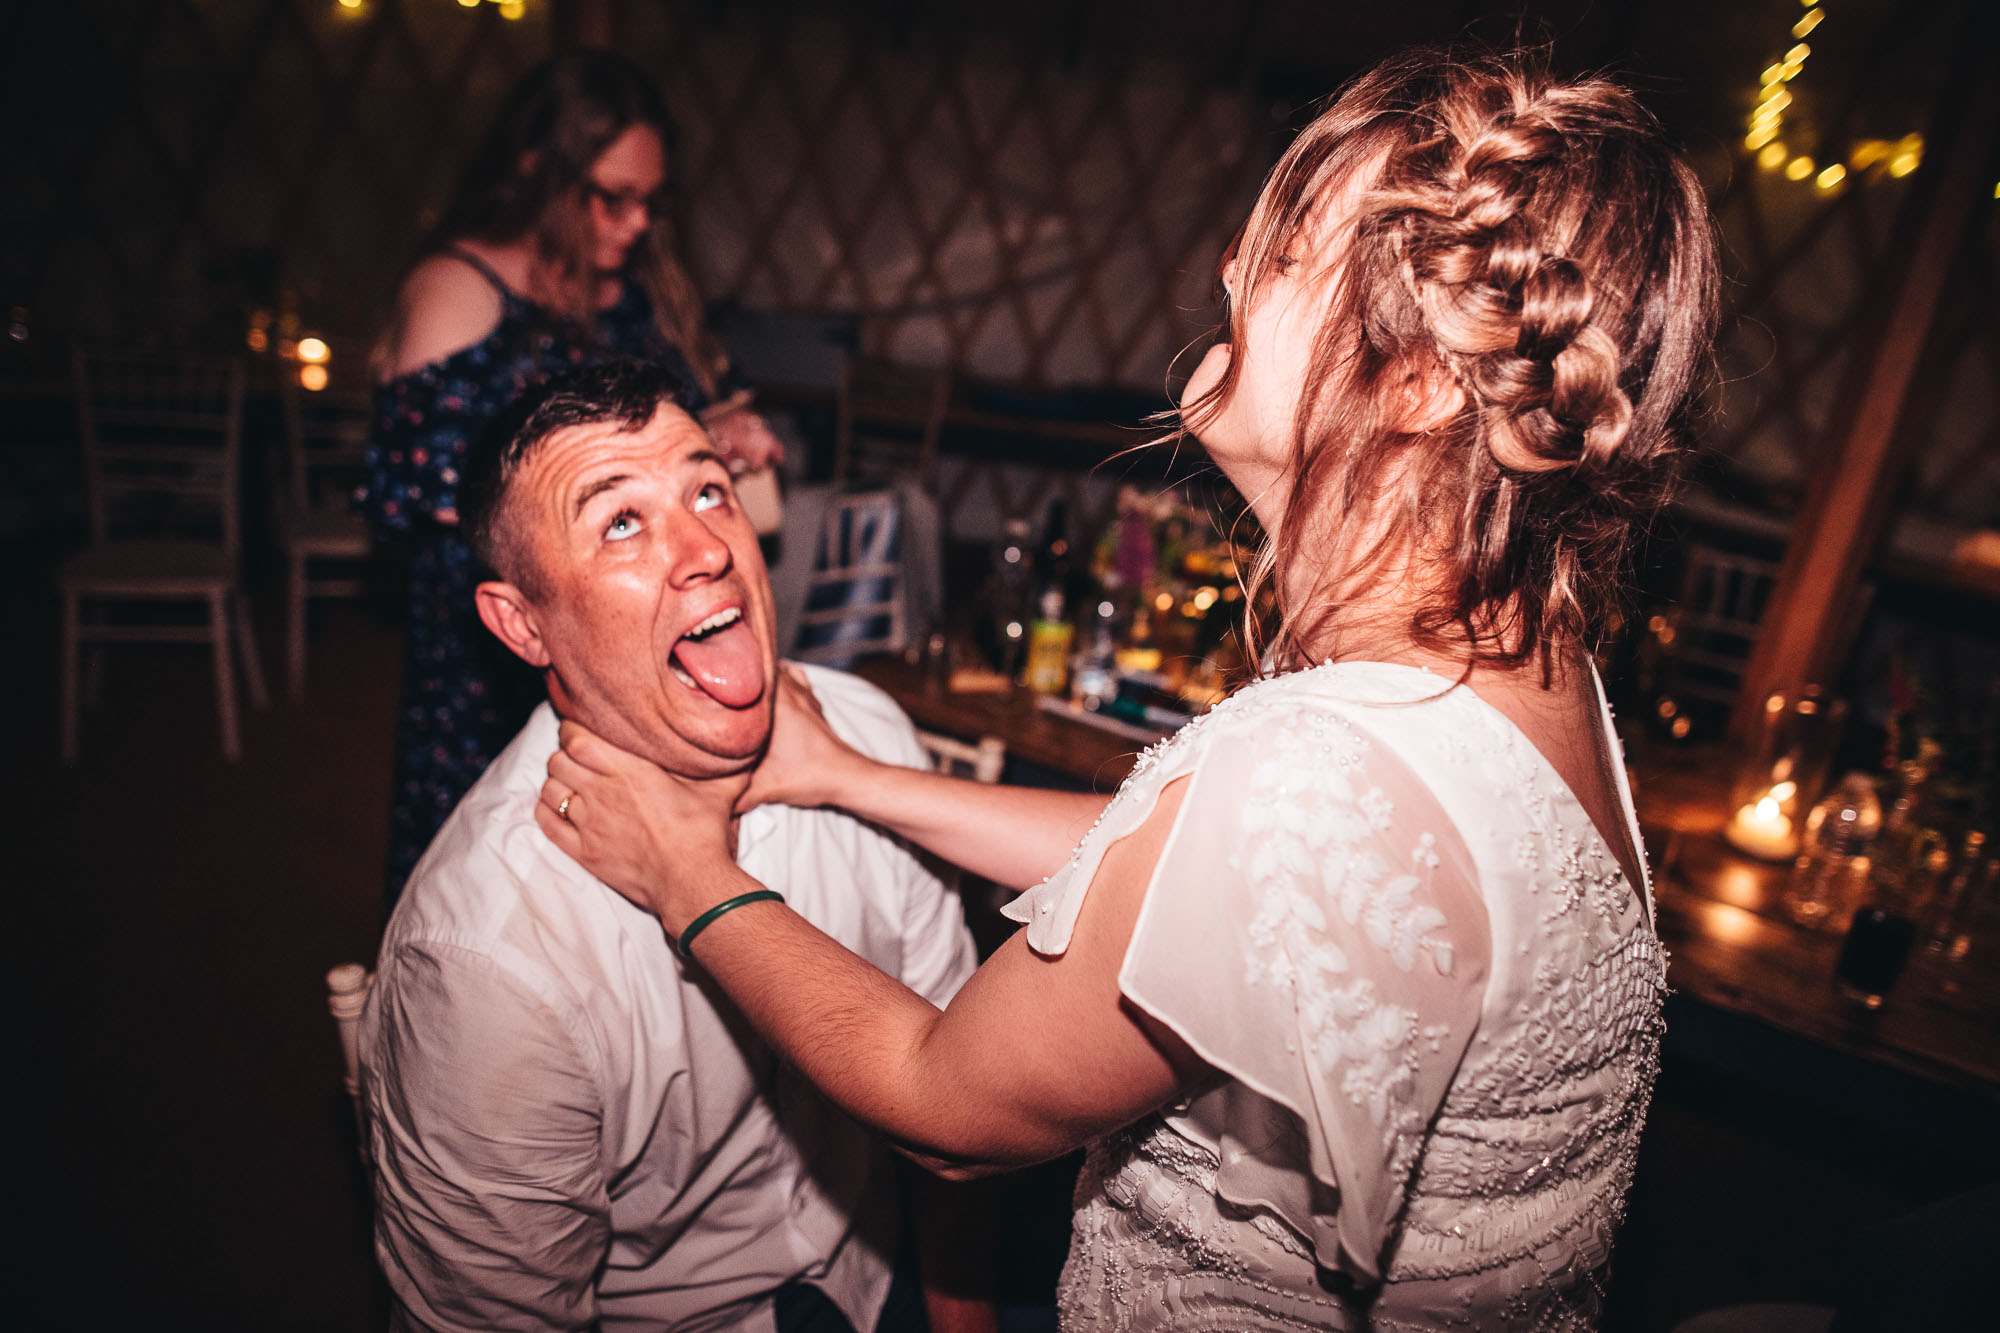 bride play strangles groom in humorous photo